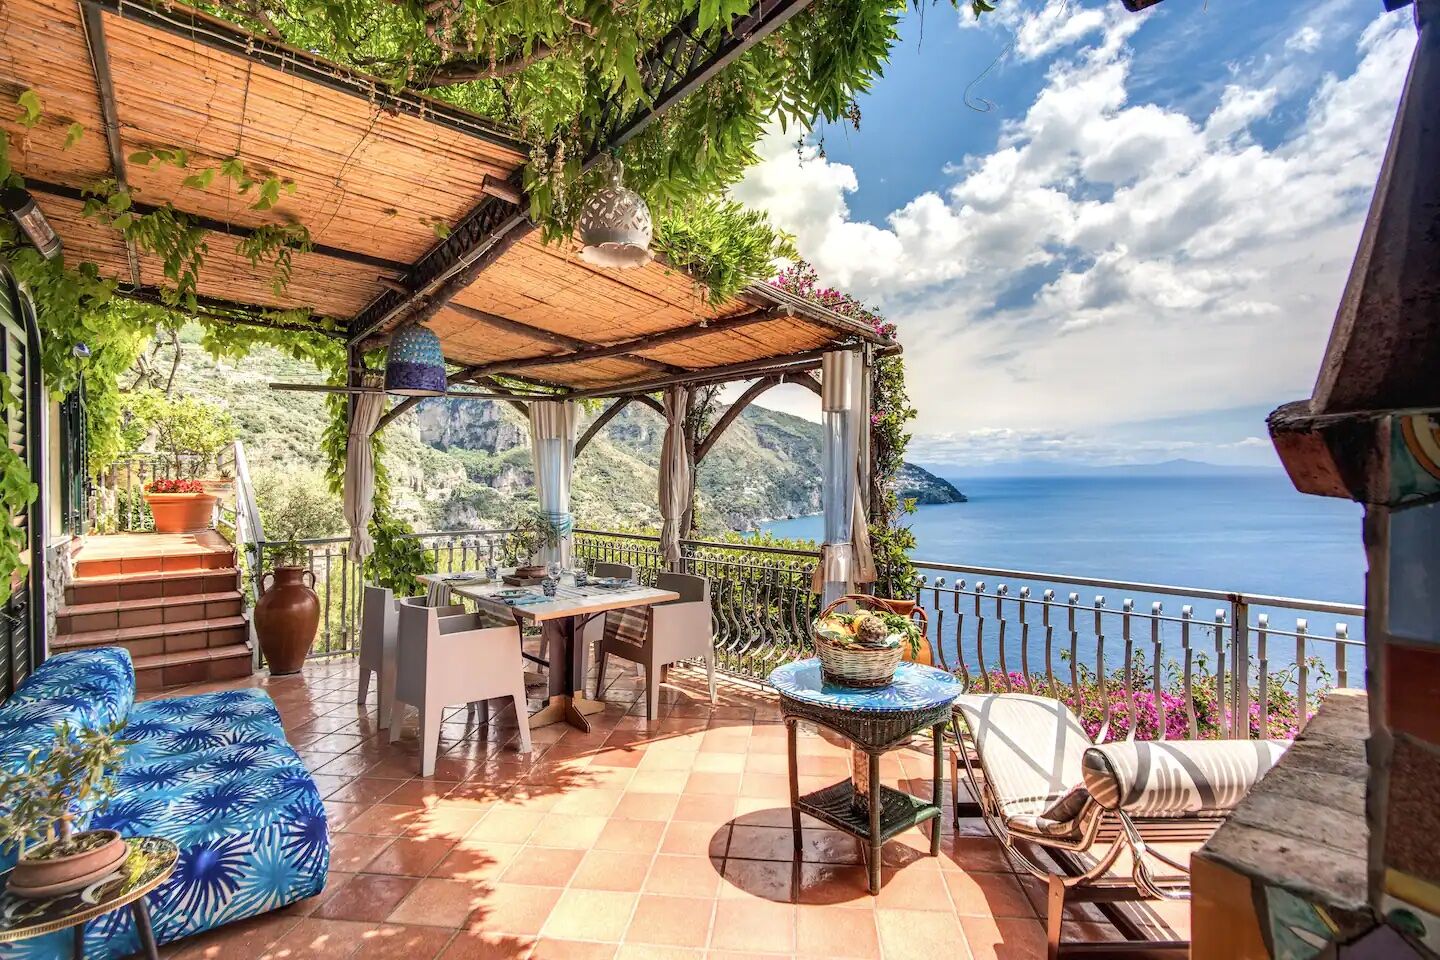 The 11 Stunning Amalfi Coast Airbnb Rentals